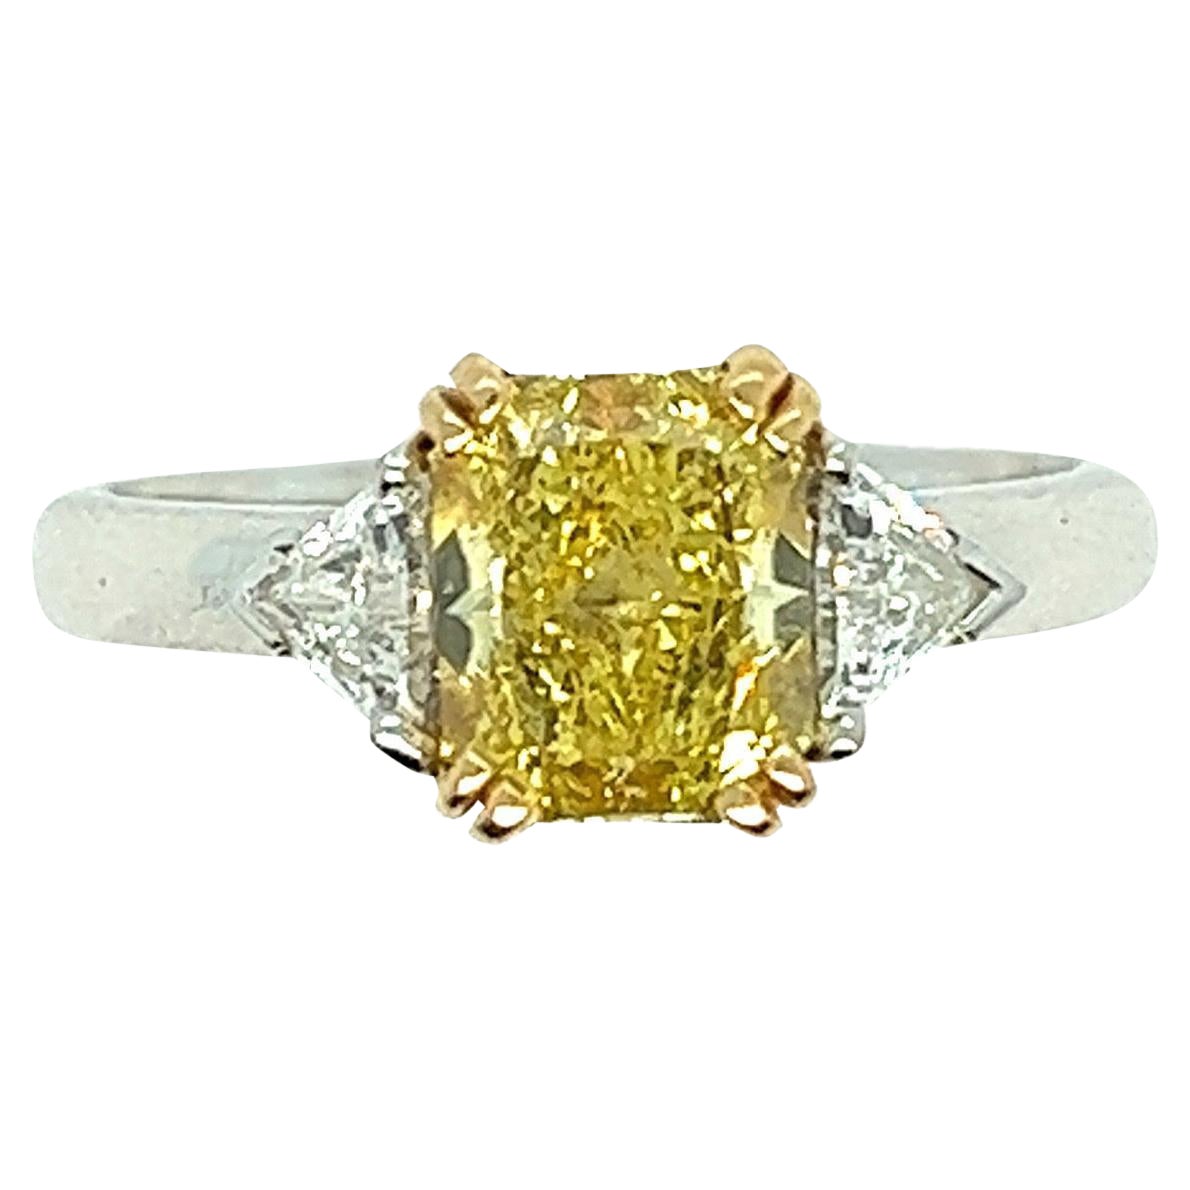 French Engagement Ring Yellow Diamond White Gold 18 Karat